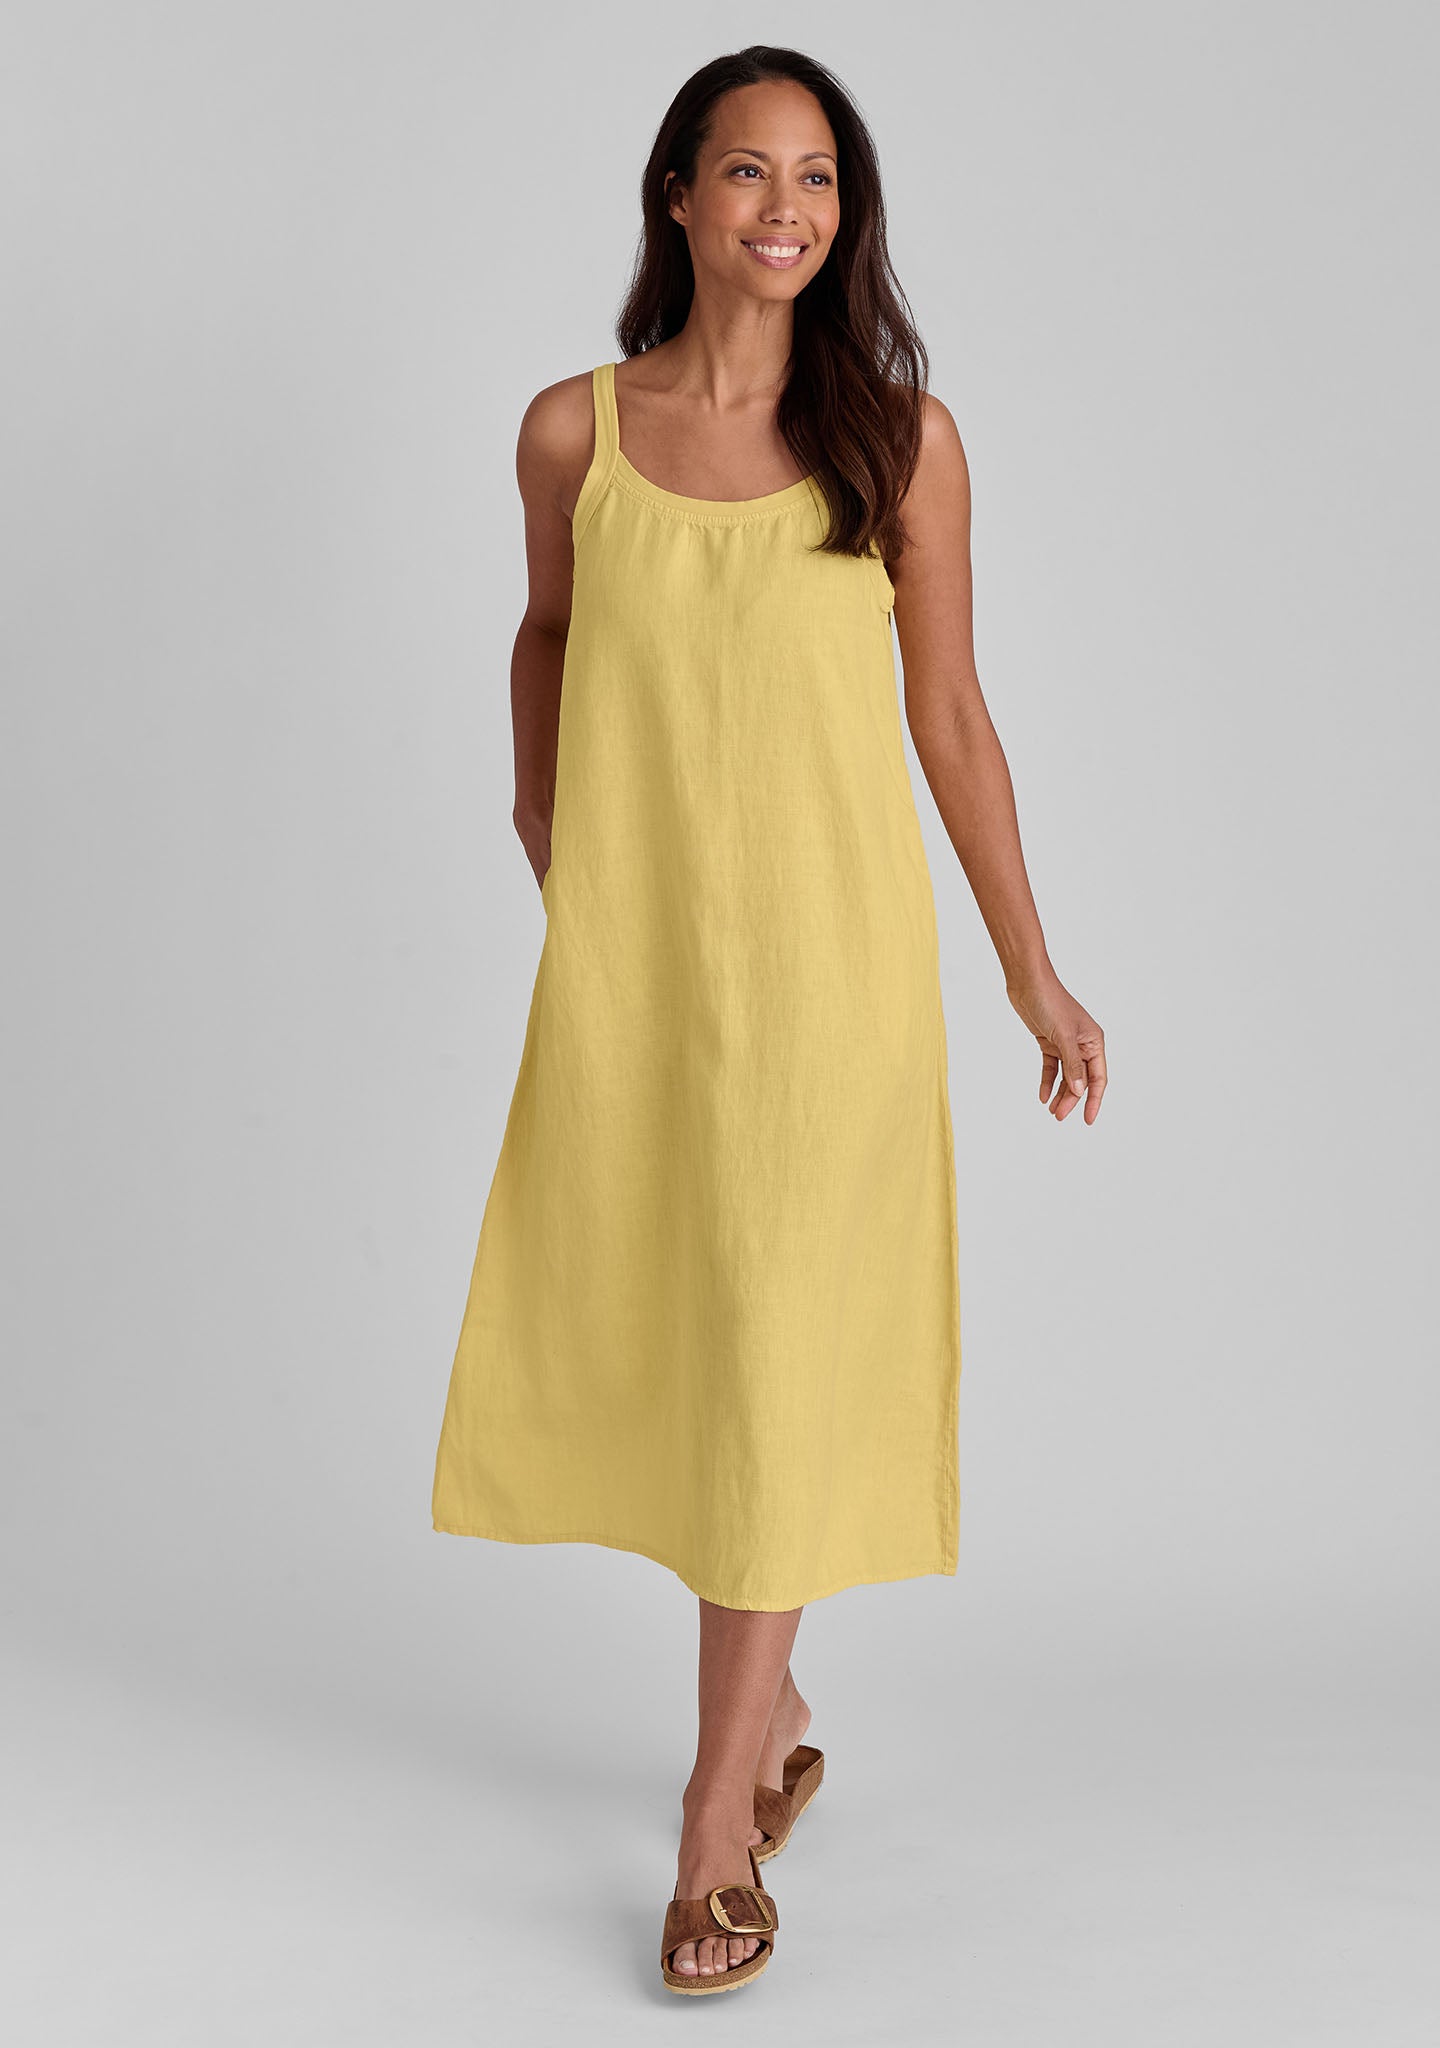 FLAX linen dress in yellow